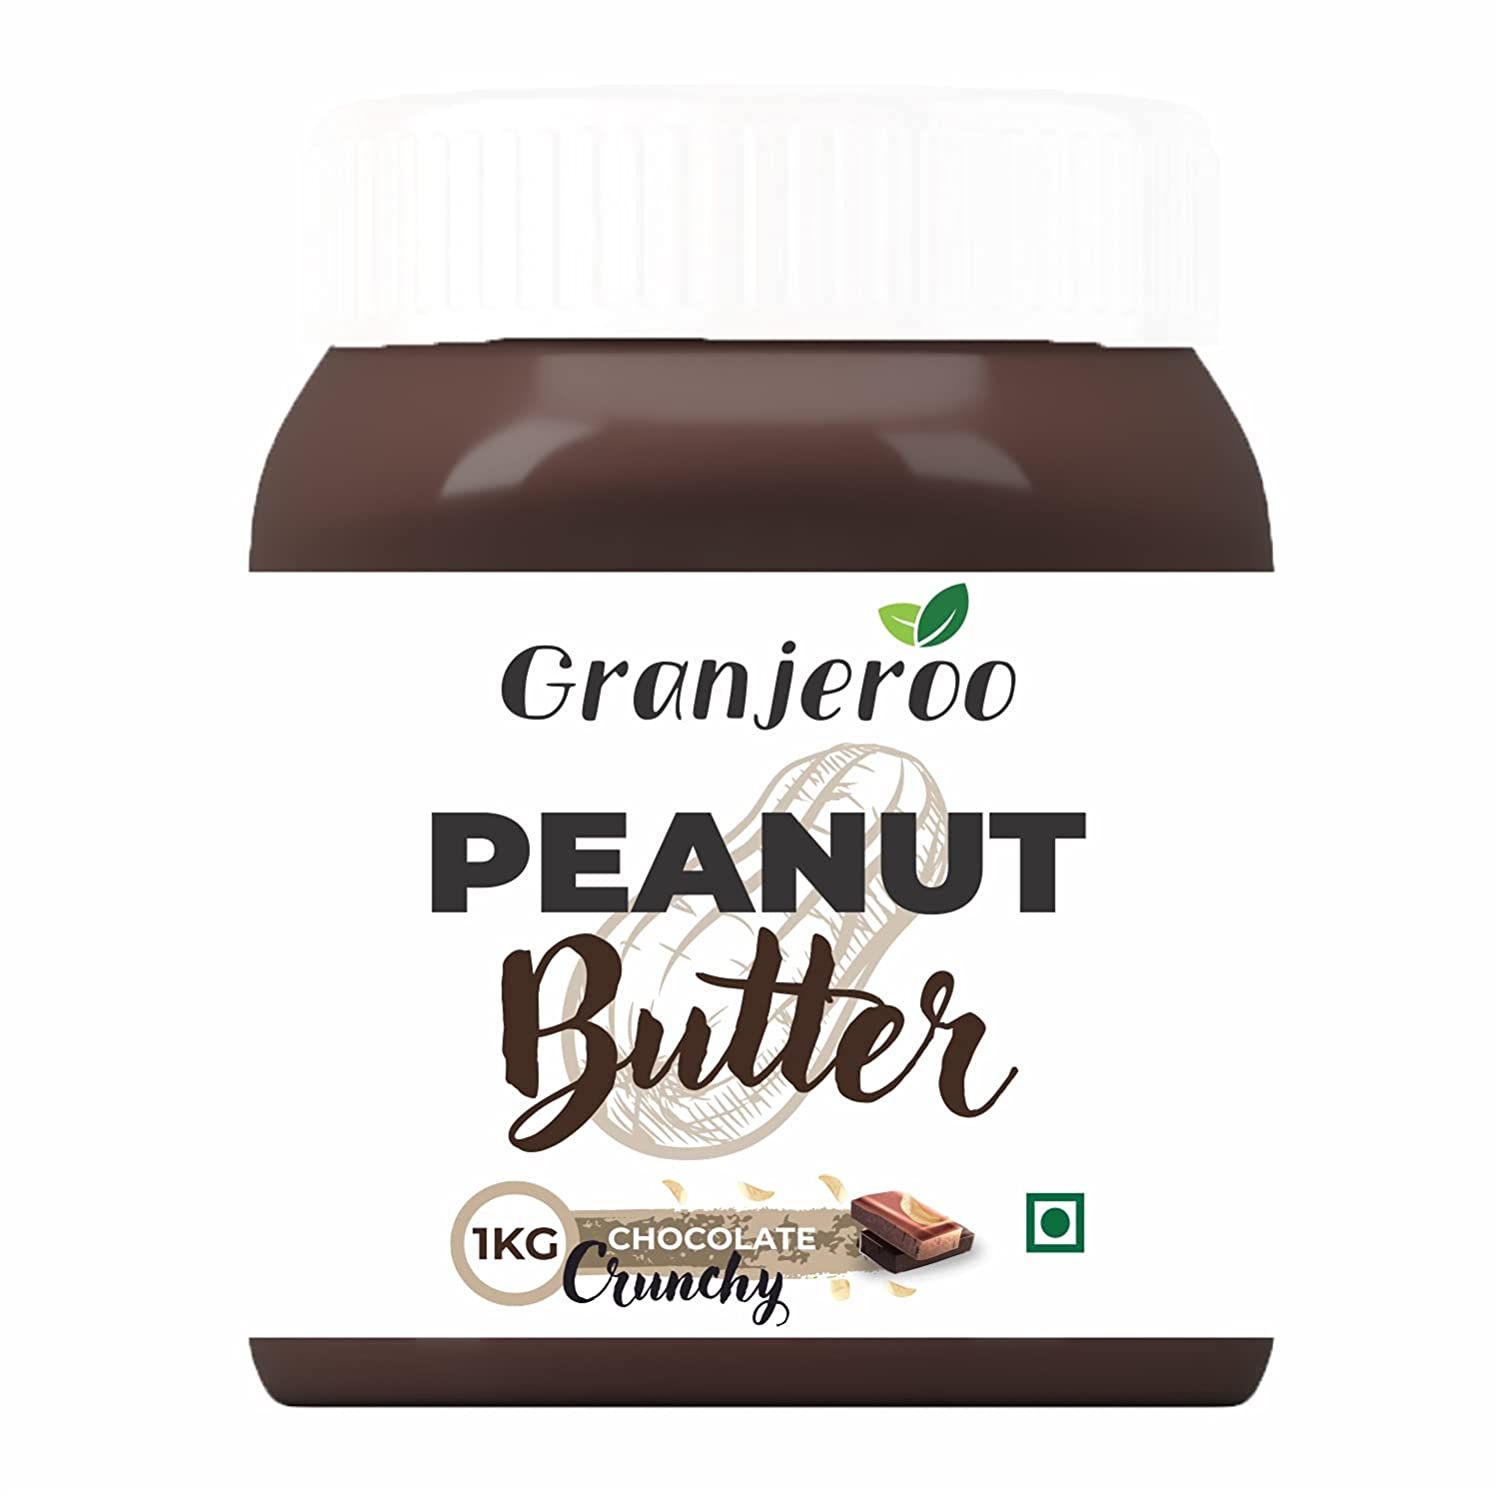 Granjeroo Chocolate Crunchy Peanut Butter Image